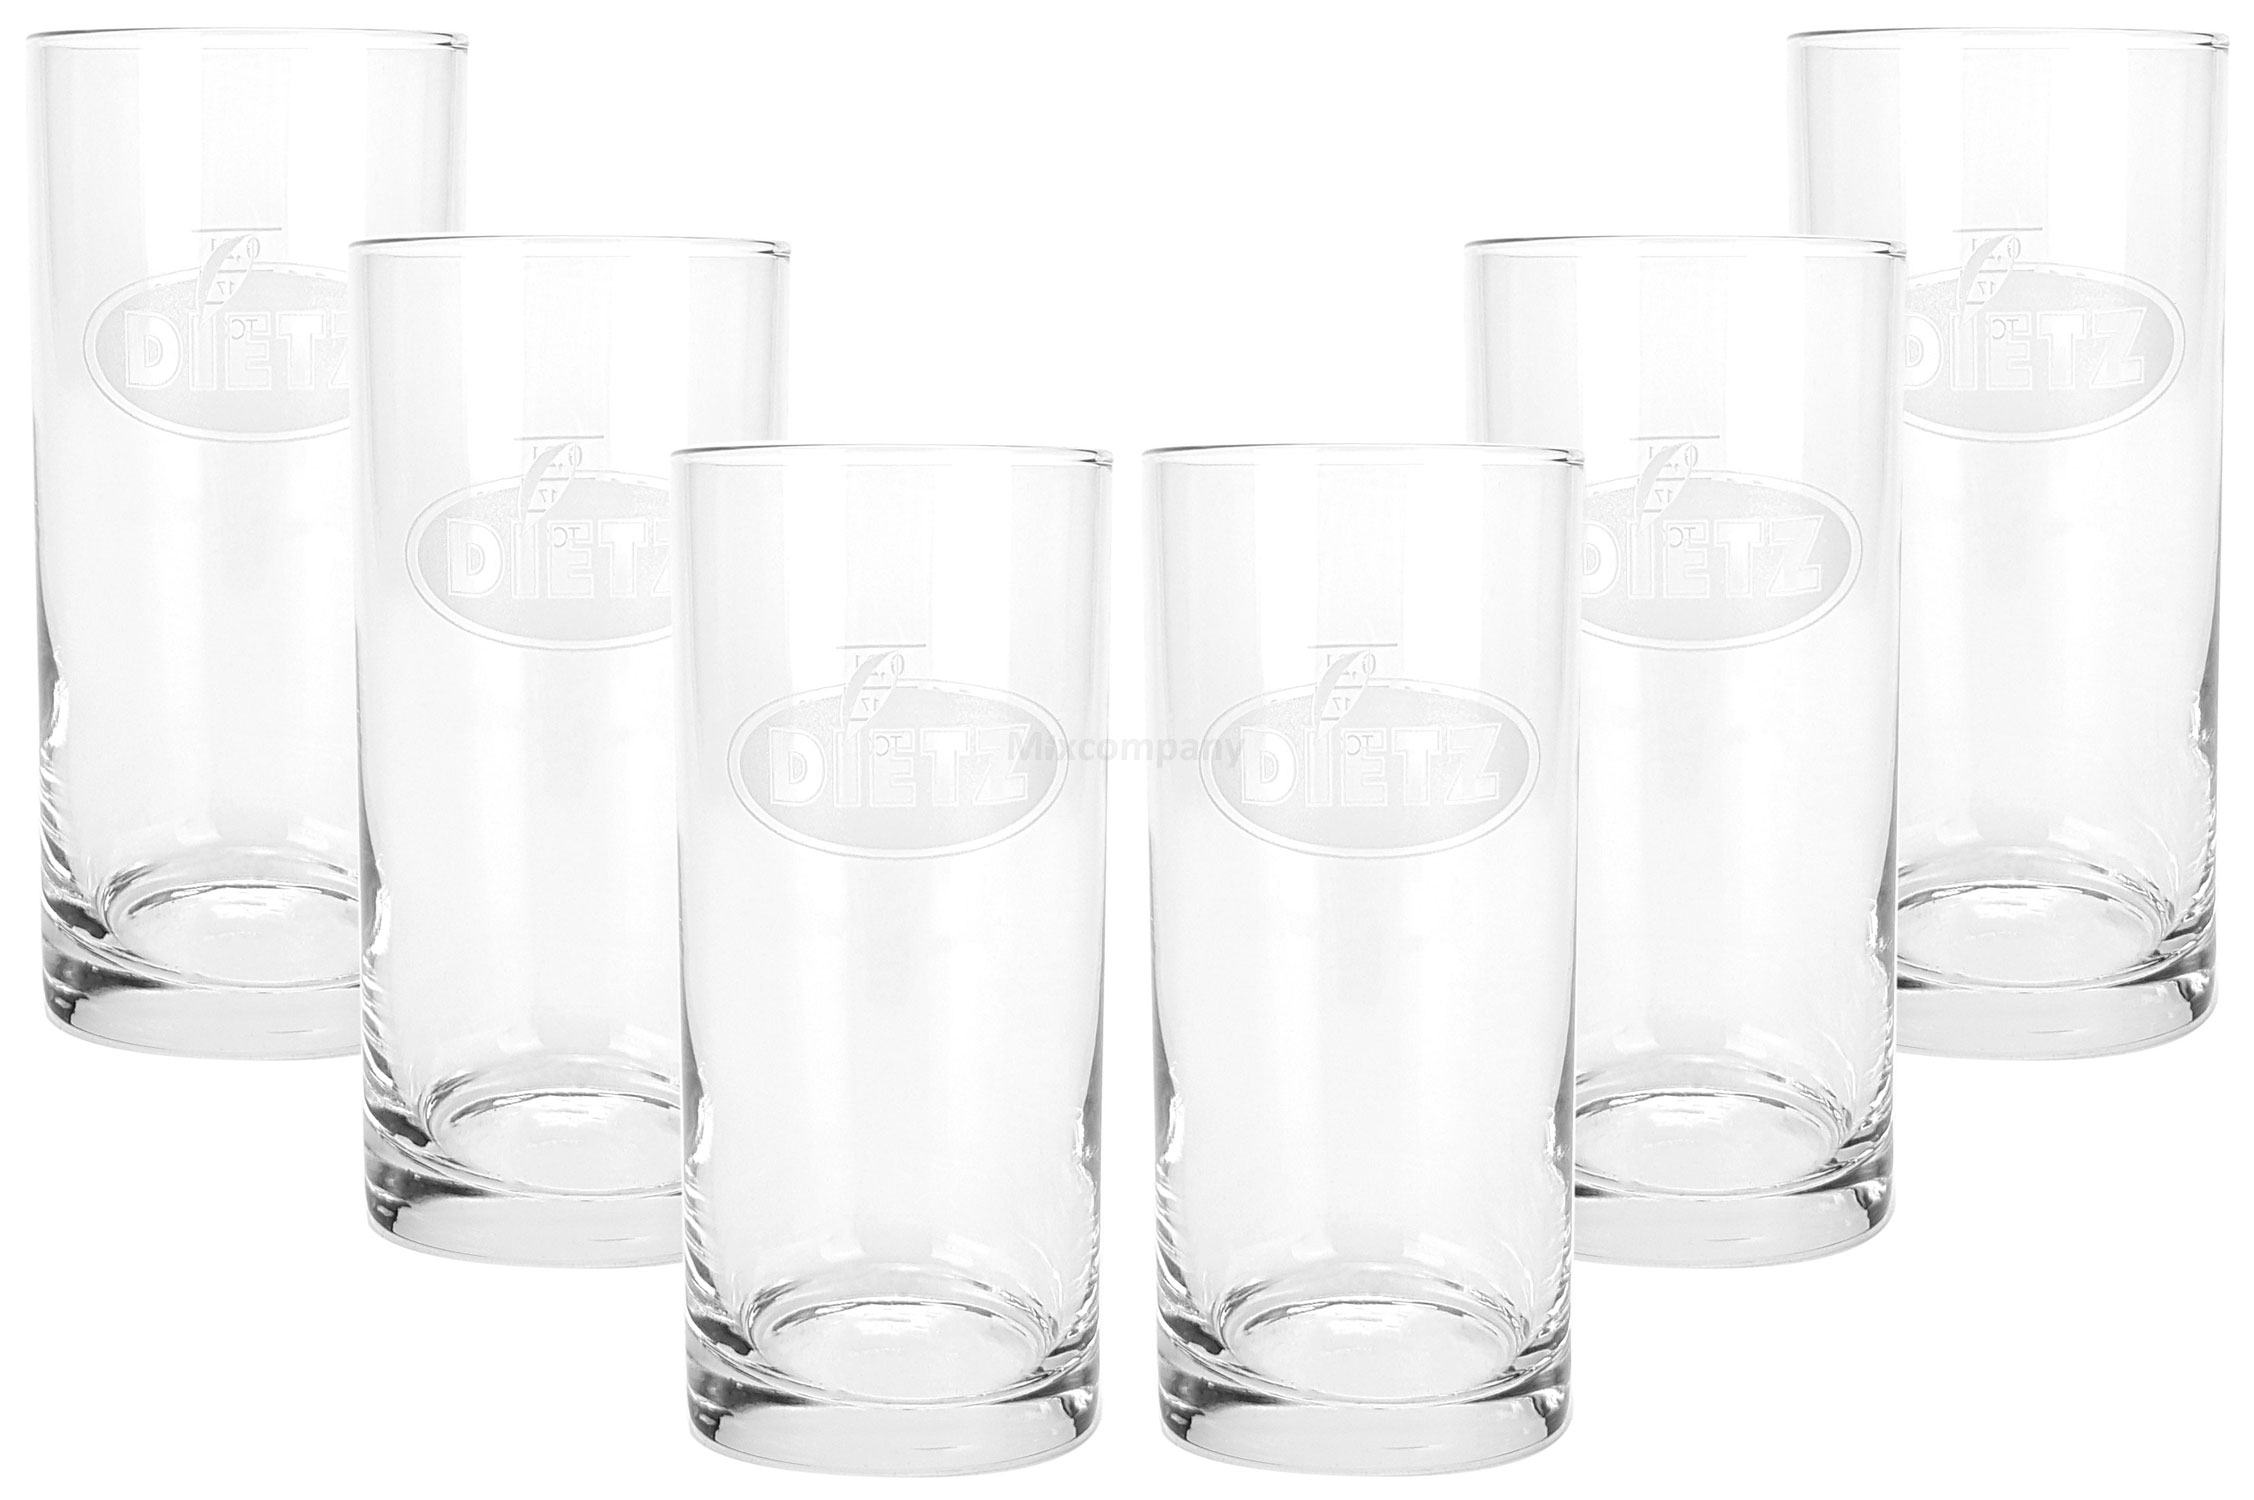 Dietz Saftglas Cocktail Longdrink Glas Gläser Set - 6x Longdrinkgläser 0,2l